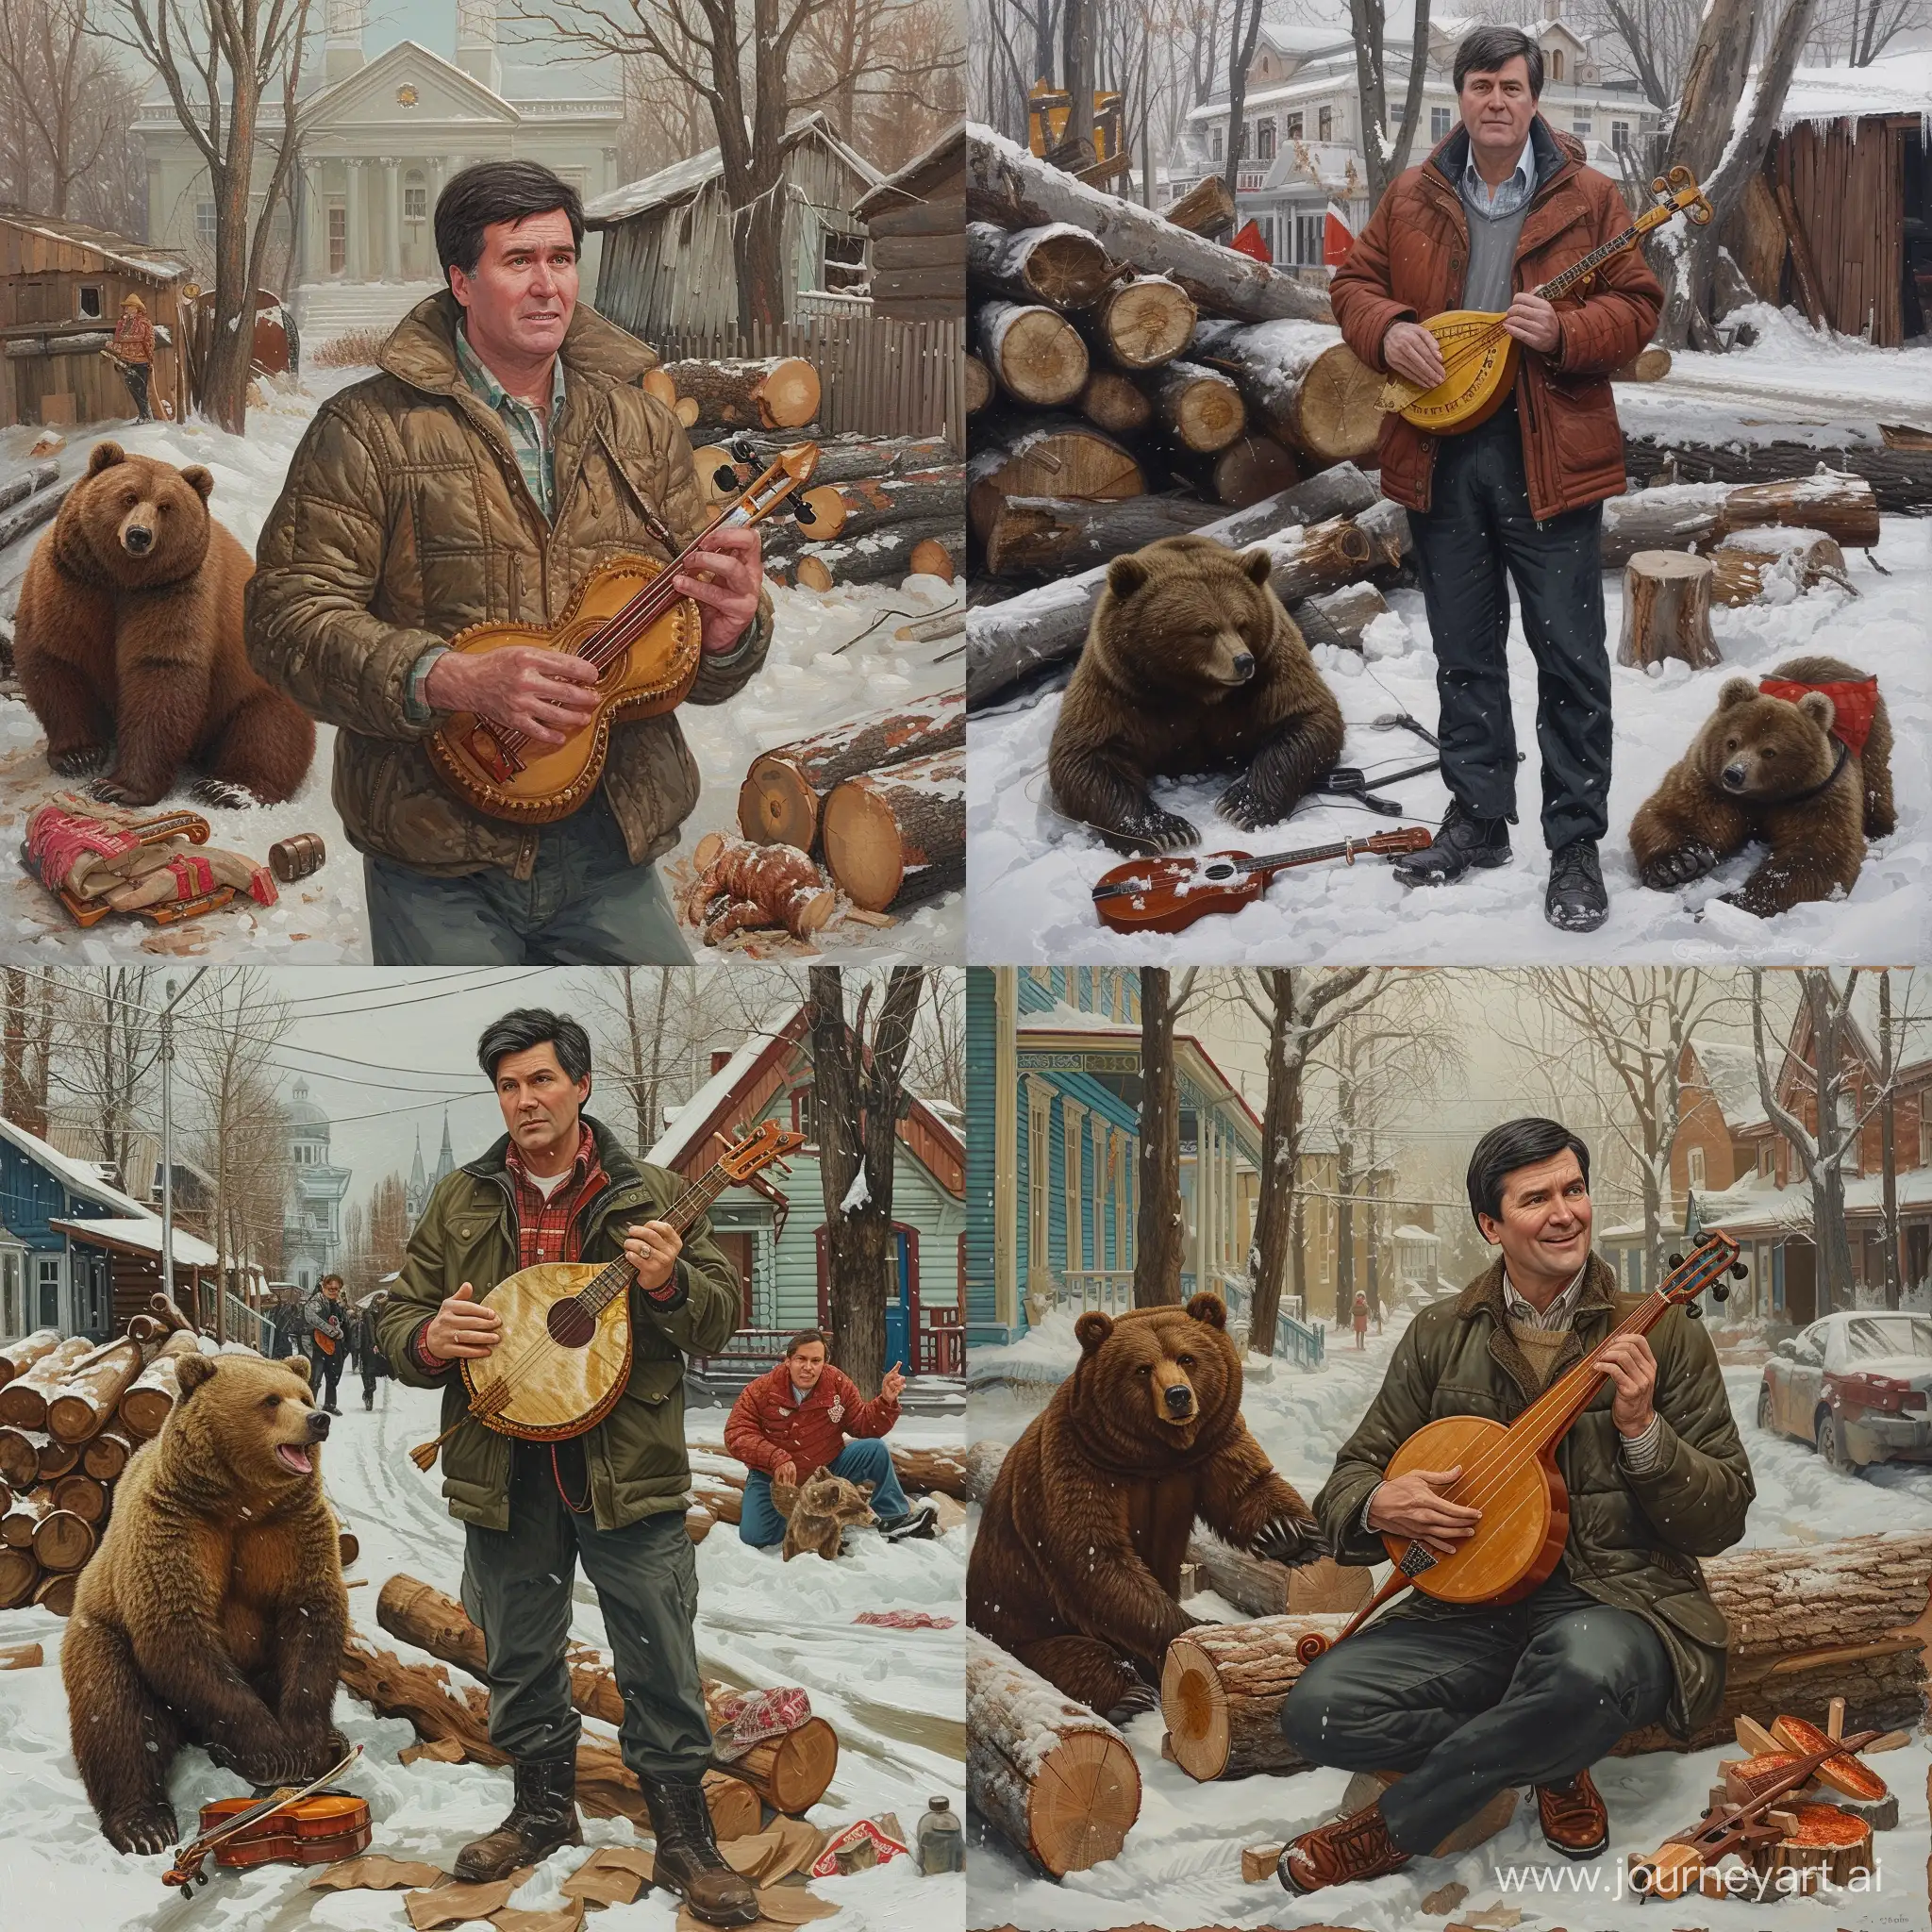 Tucker-Carlson-Playing-Balalaika-in-Winter-Village-with-Bear-and-Logs